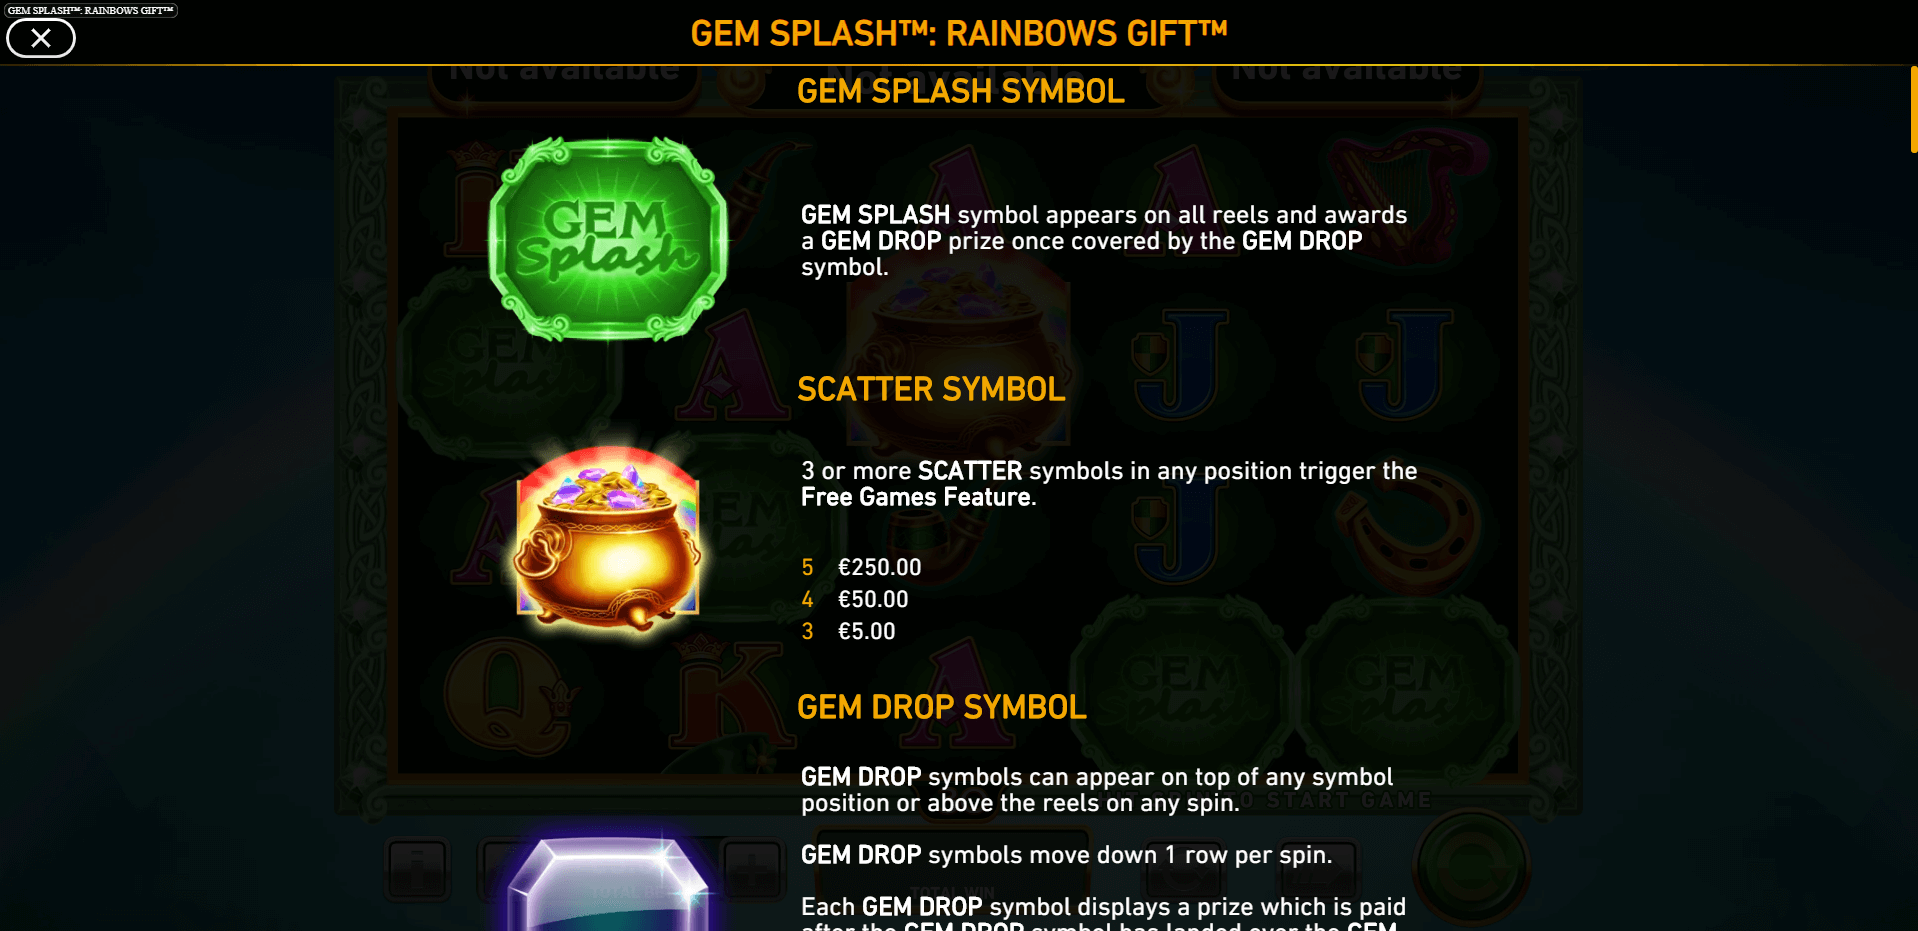 gem splash rainbows gift slot machine detail image 0